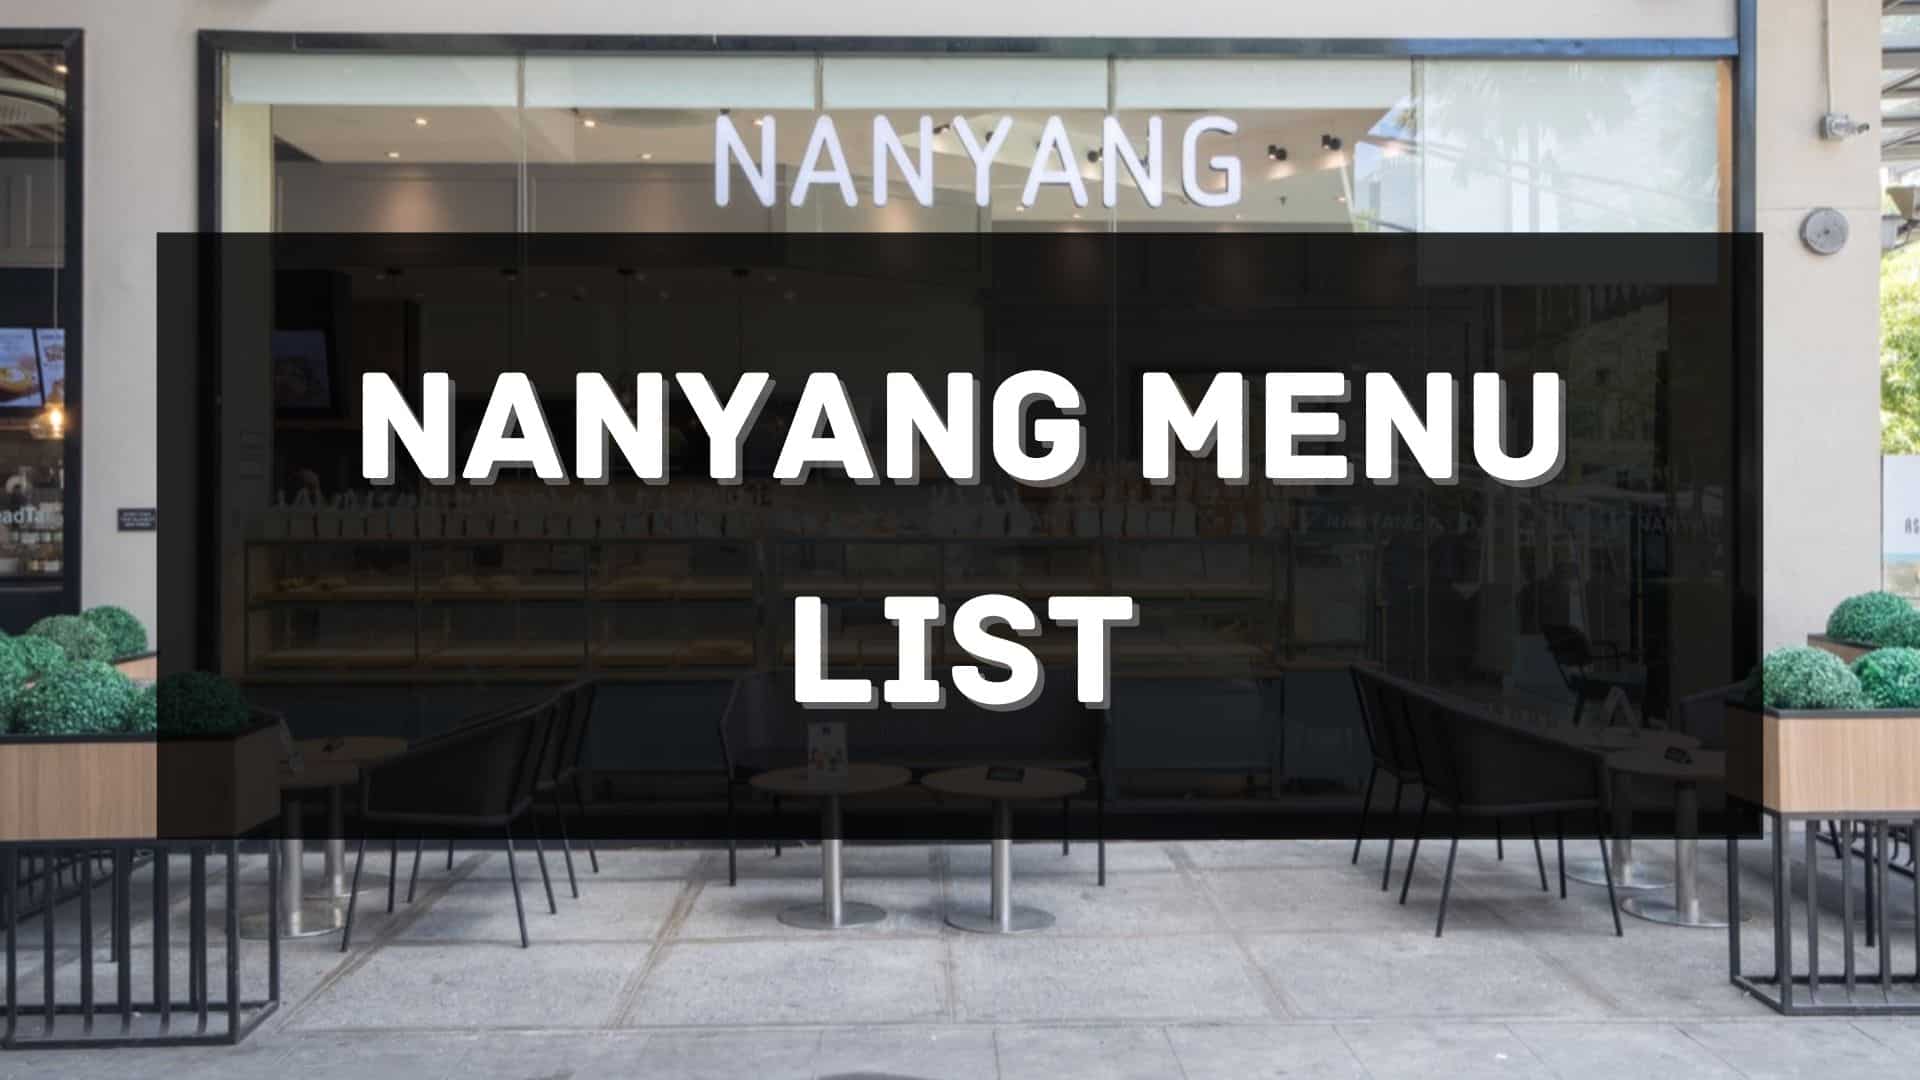 nanyang menu prices philippines